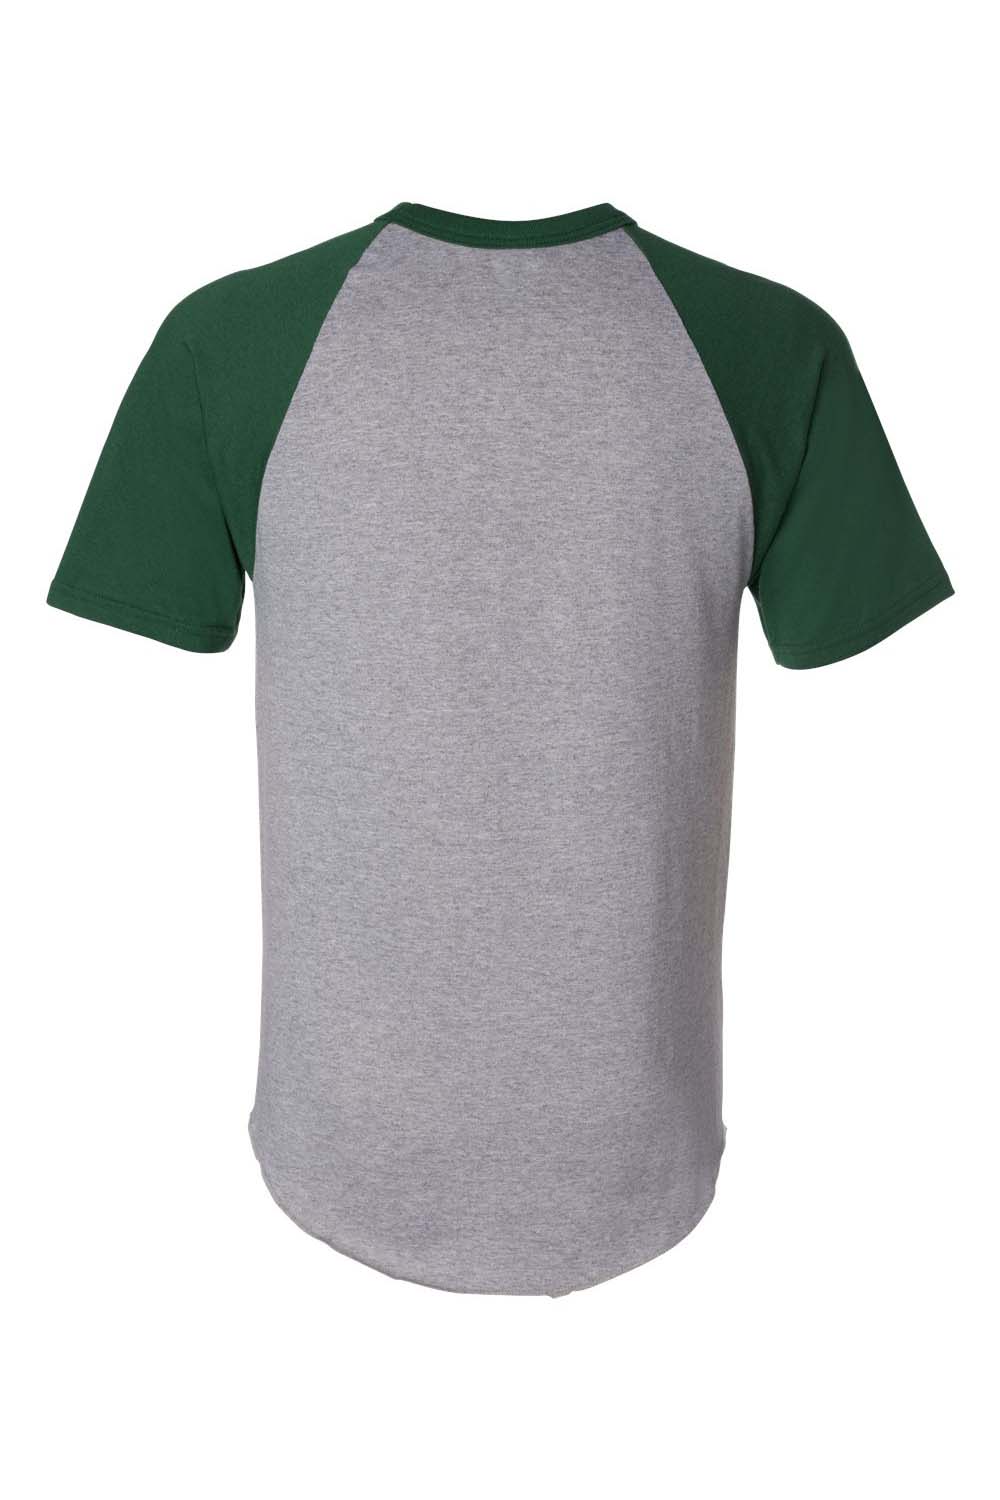 Augusta Sportswear 423 Mens Short Sleeve Crewneck T-Shirt Heather Grey/Dark Green Model Flat Back